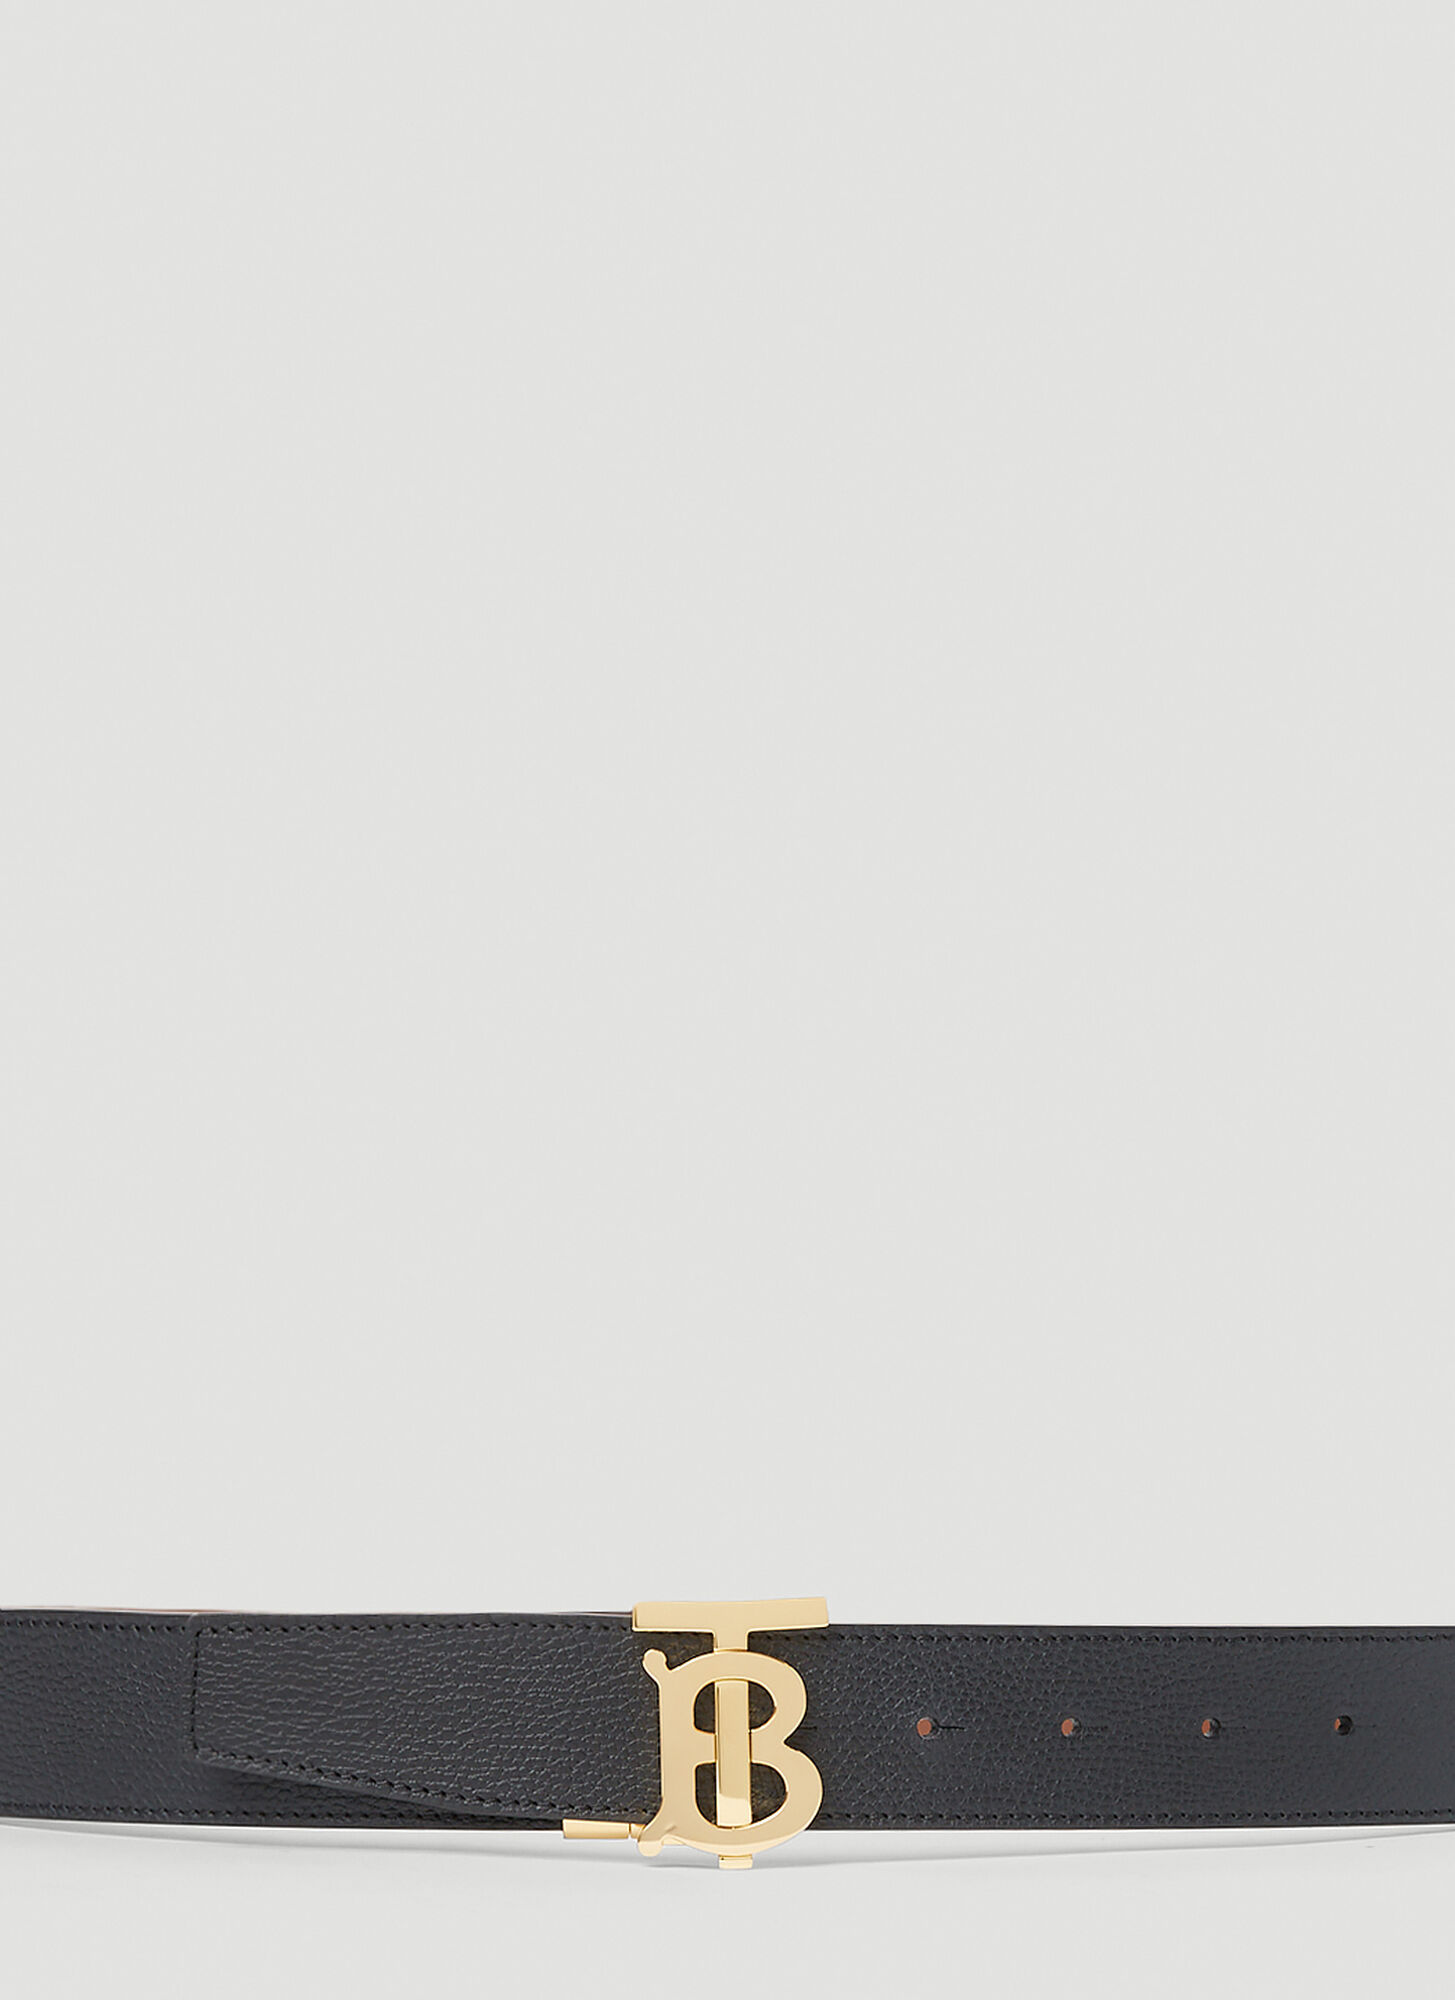 Burberry Monogram TB Buckle Plaid Belt - ShopStyle